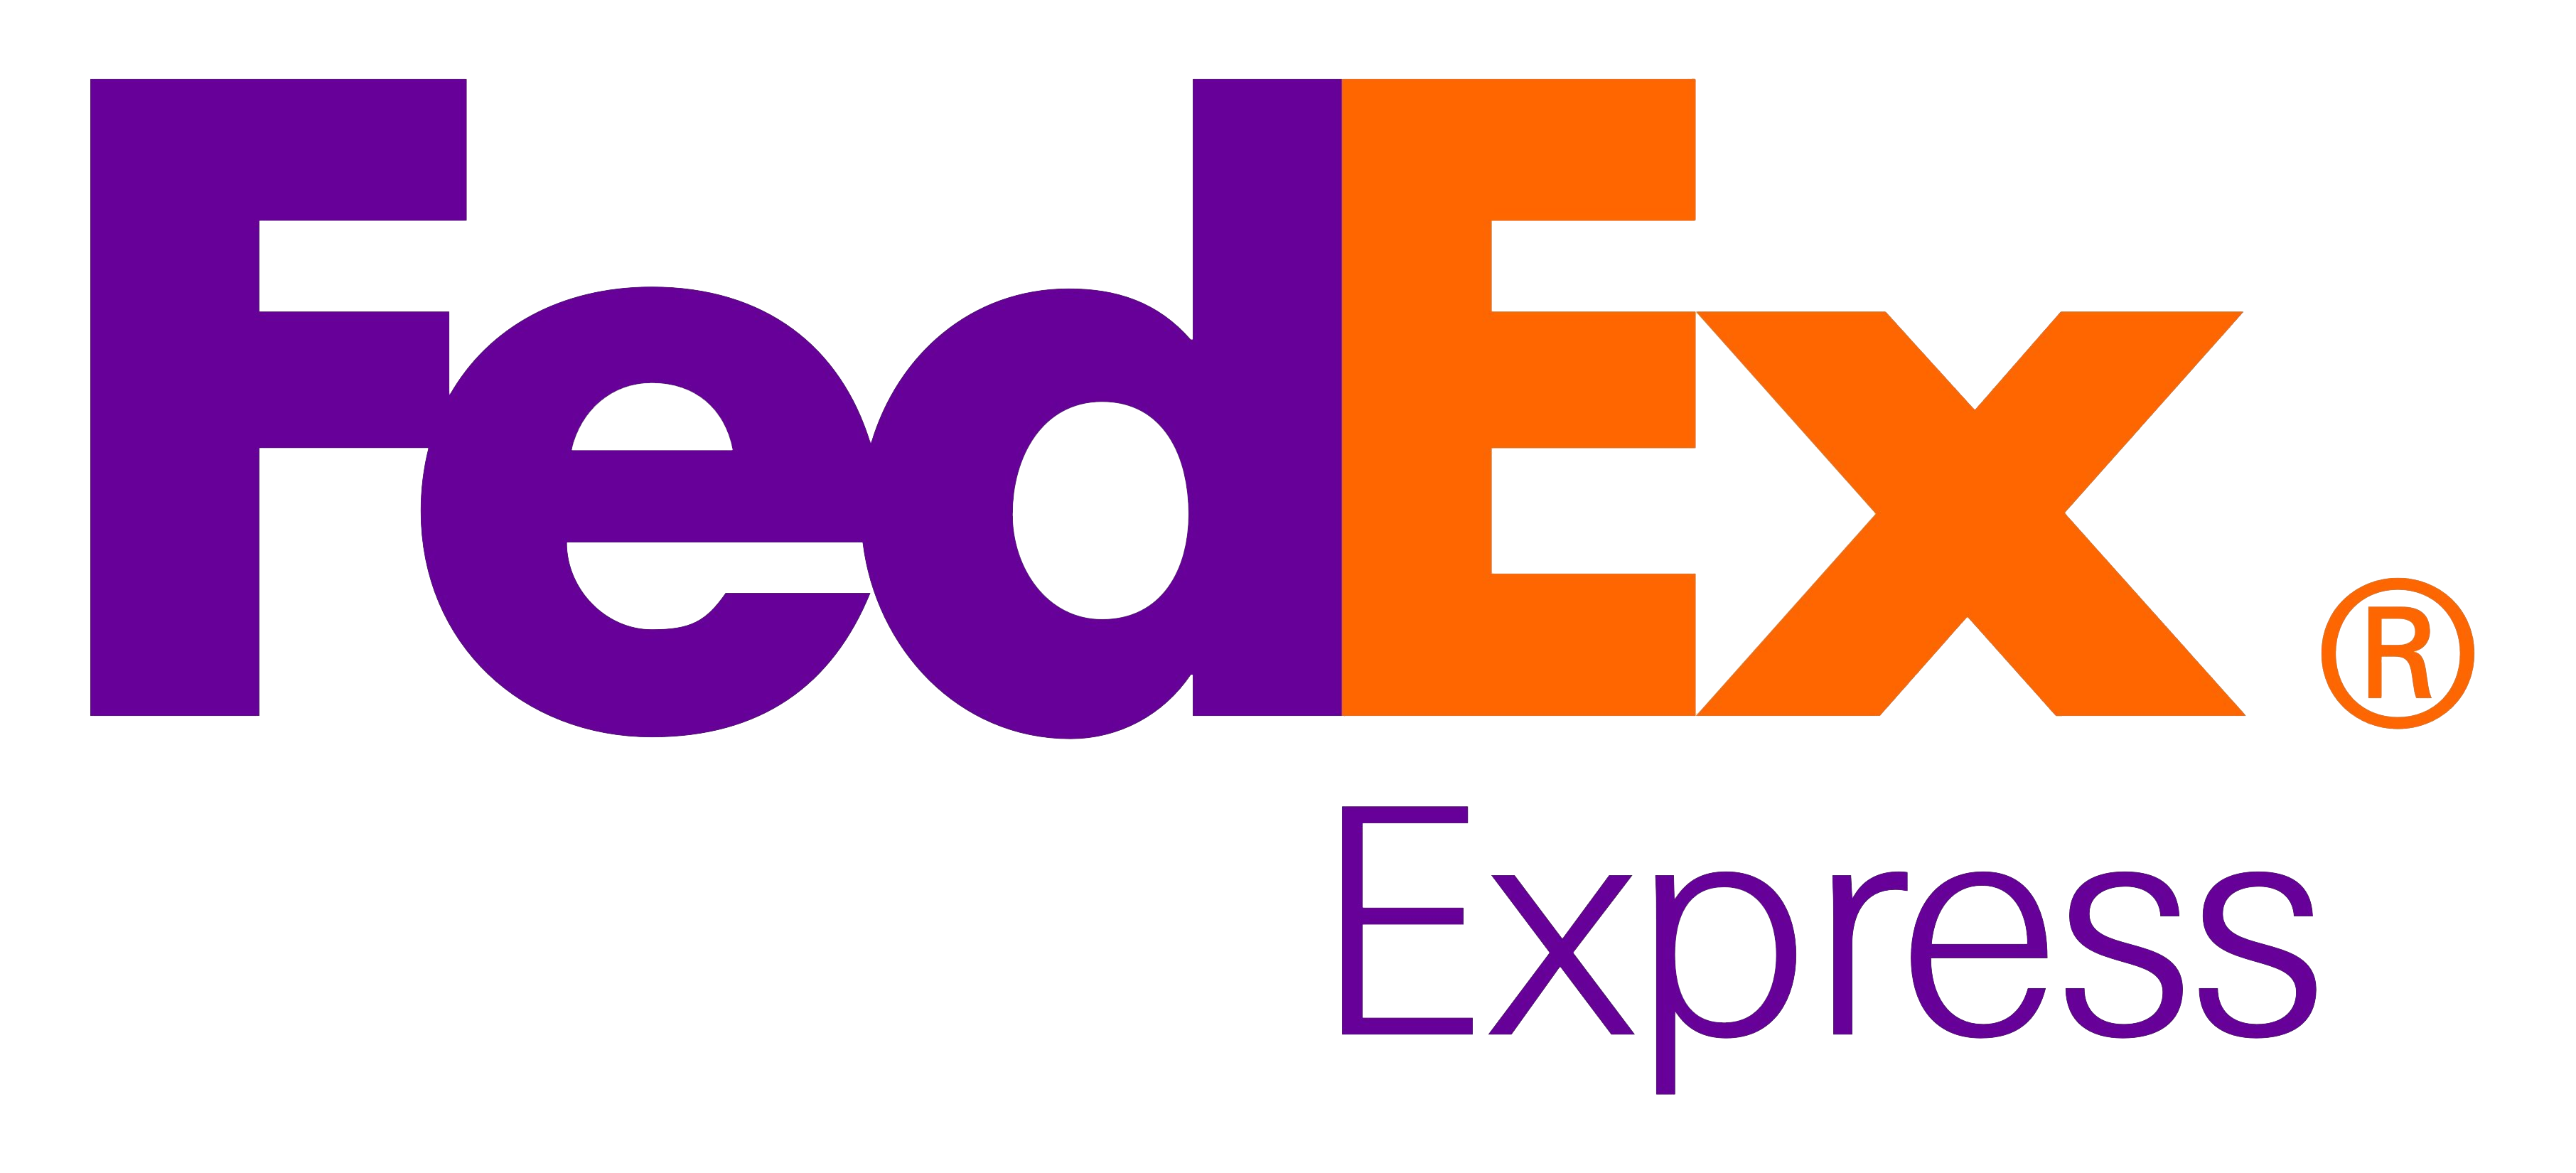 FedEx Express Logo PNG Image